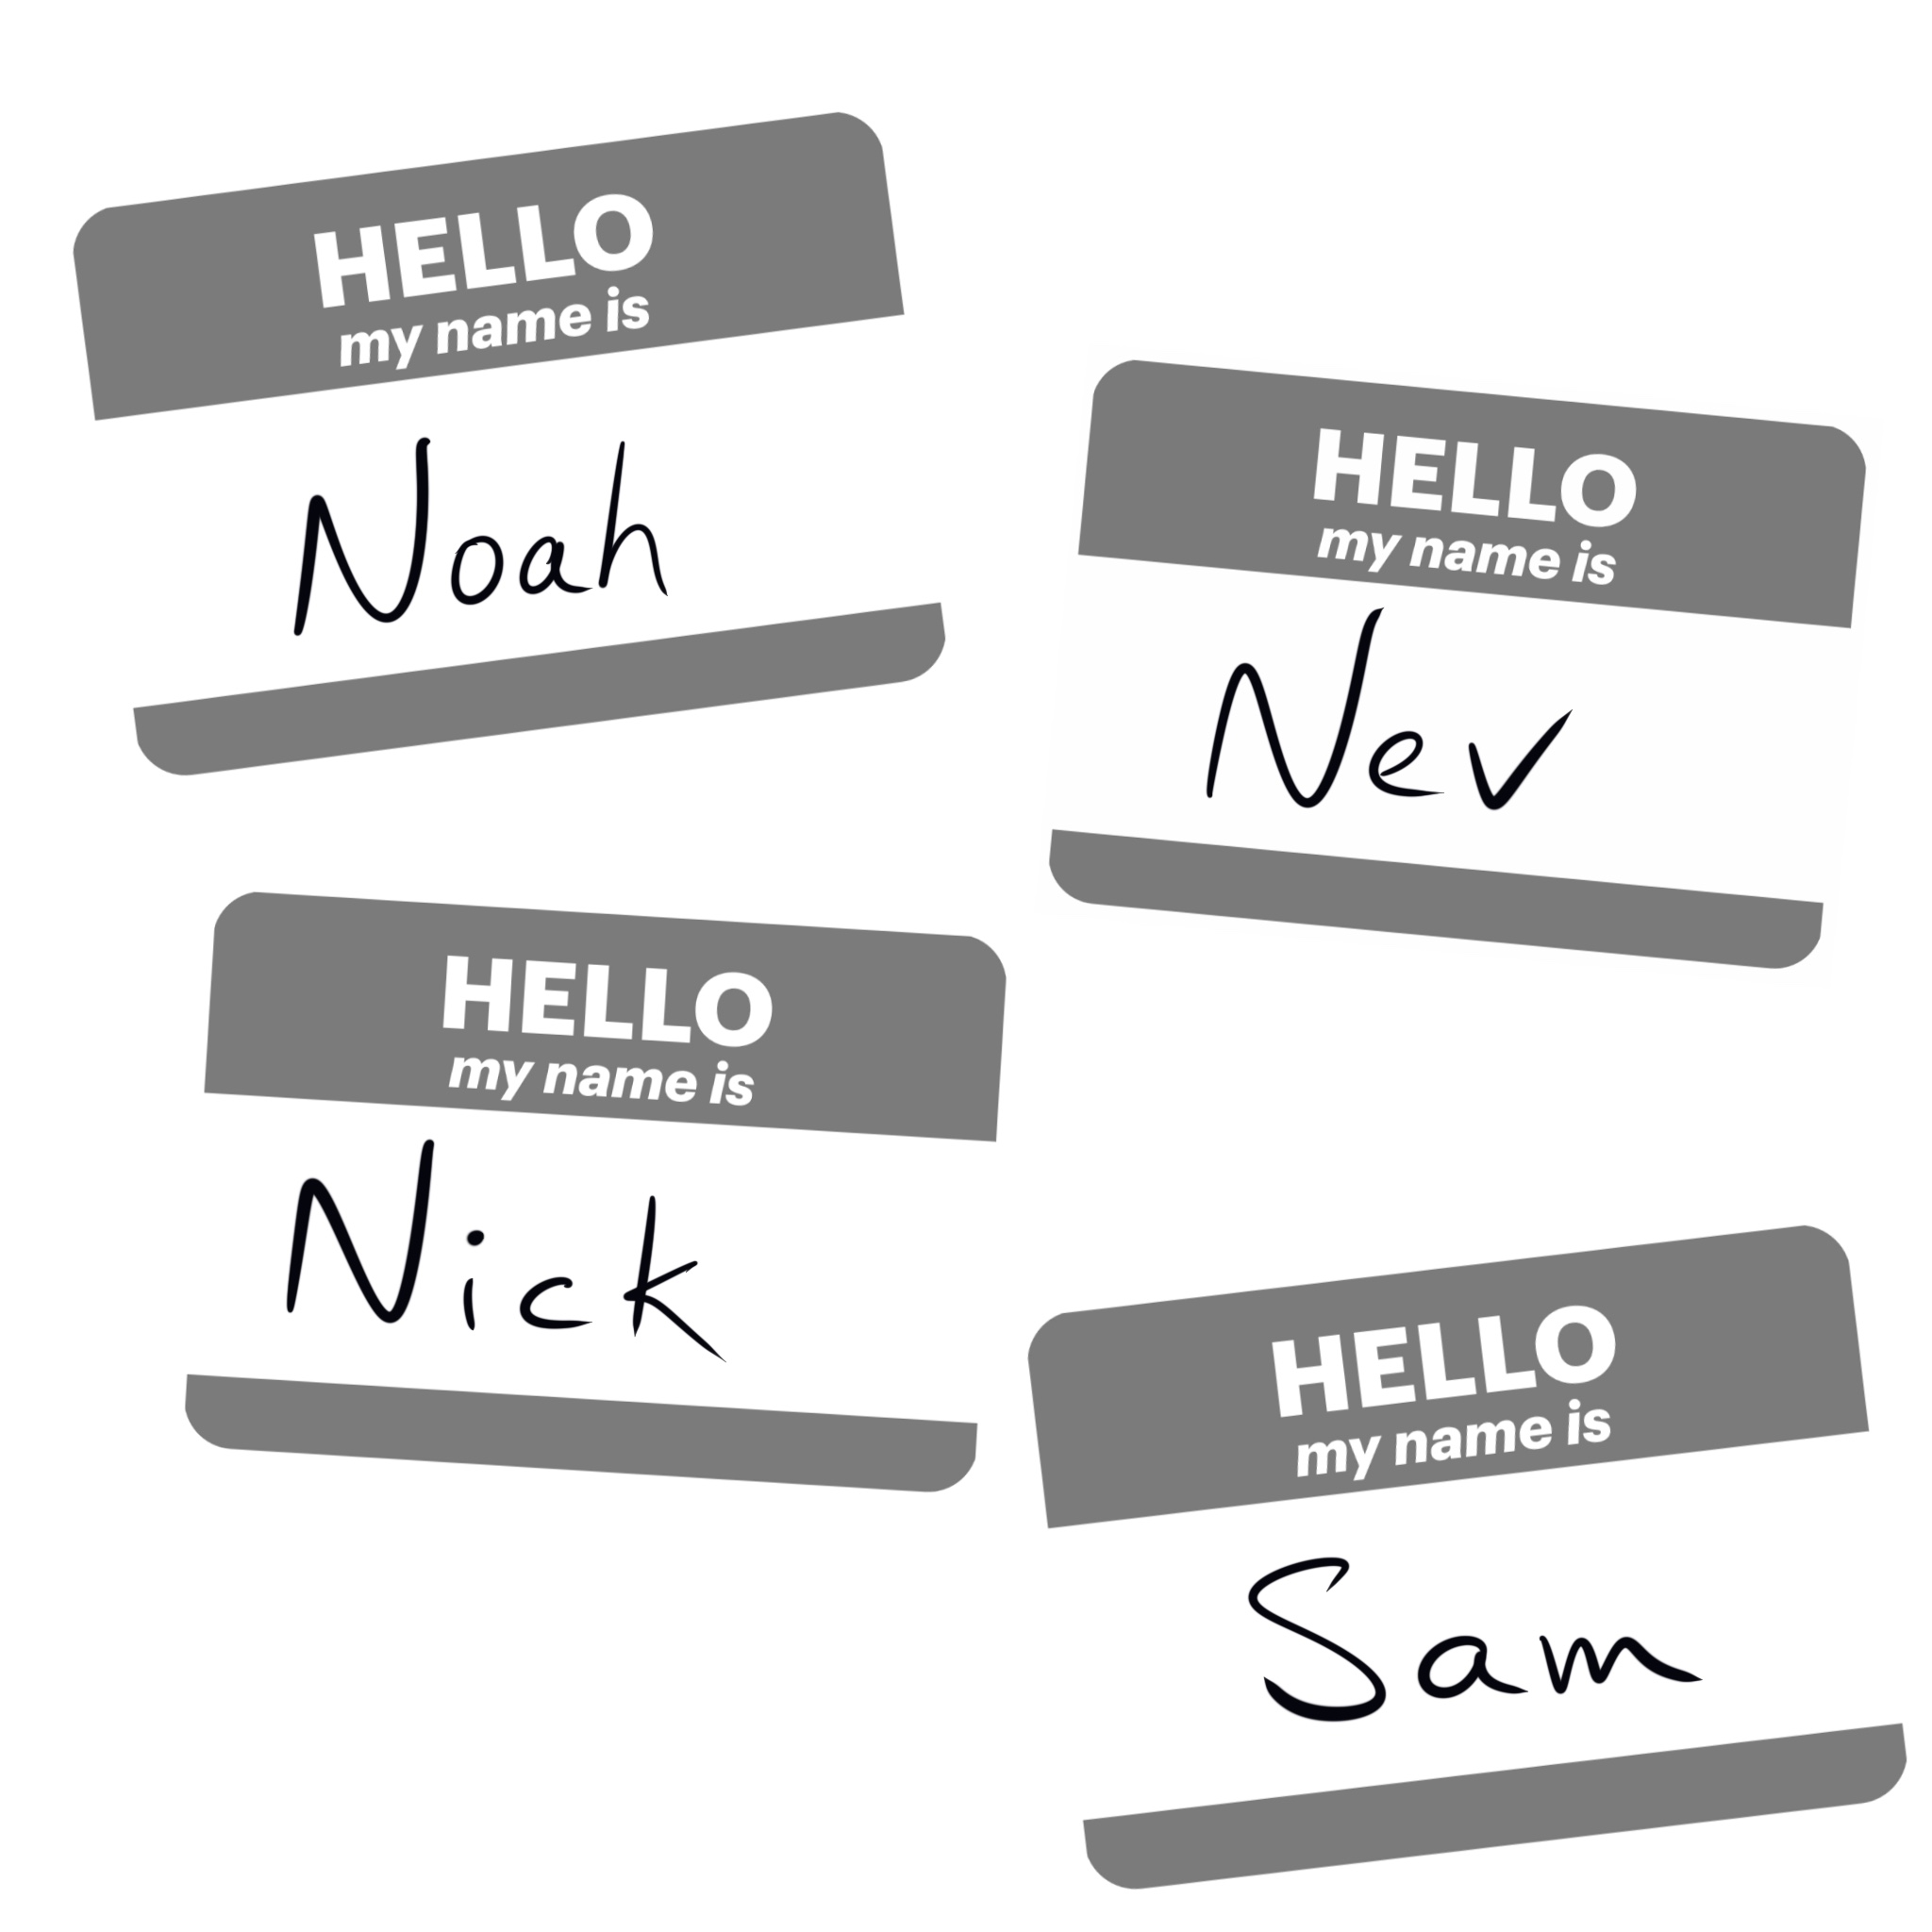 Noah, Nev, Nick, and Sam